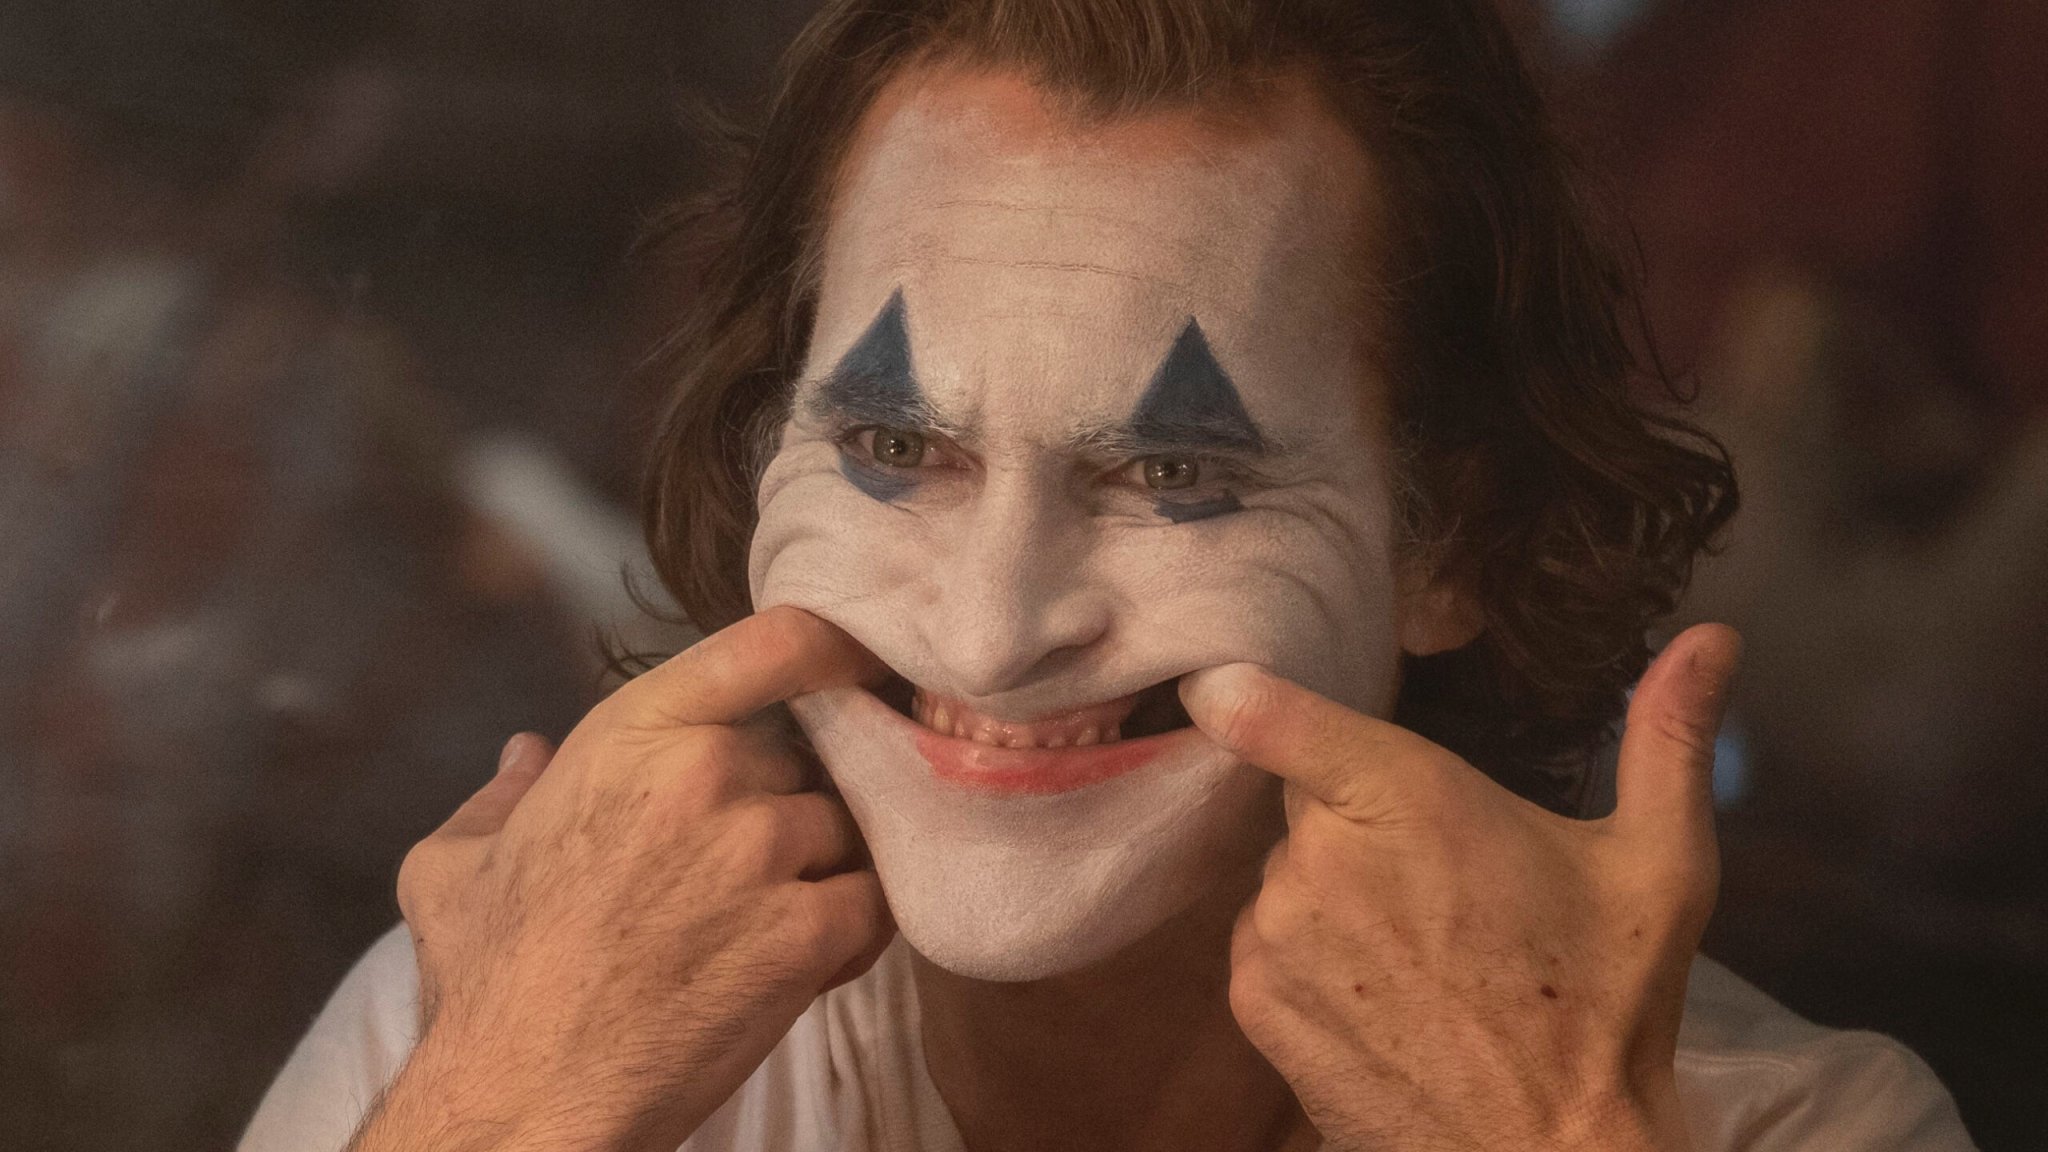 Joker 2: Joaquin Phoenix In Talks To Return